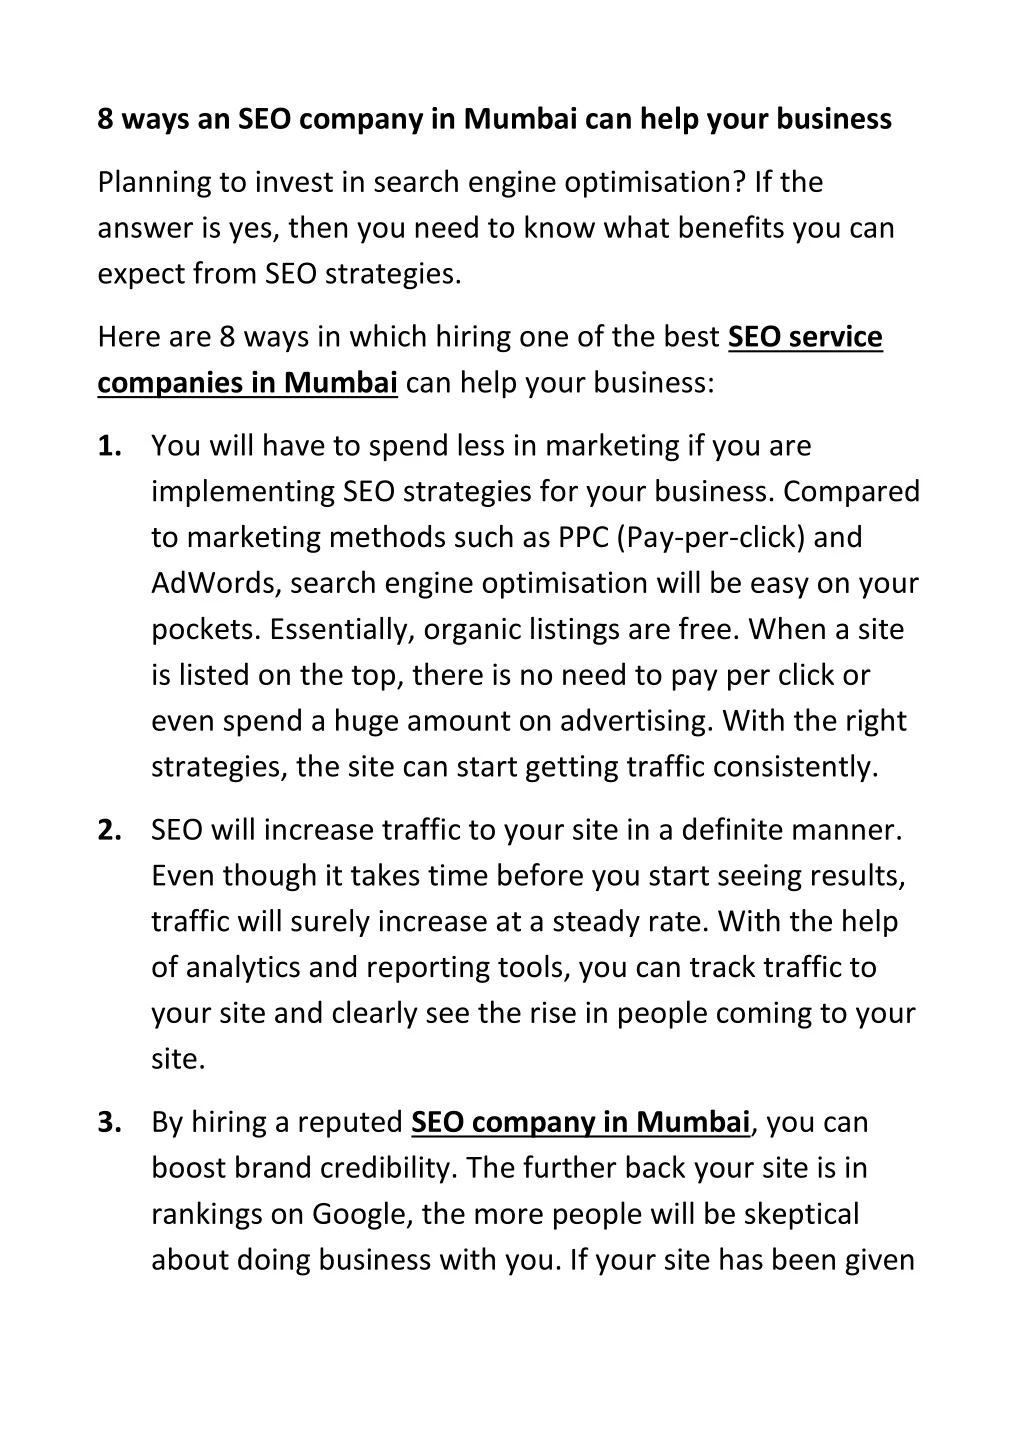 8 ways an seo company in mumbai can help your